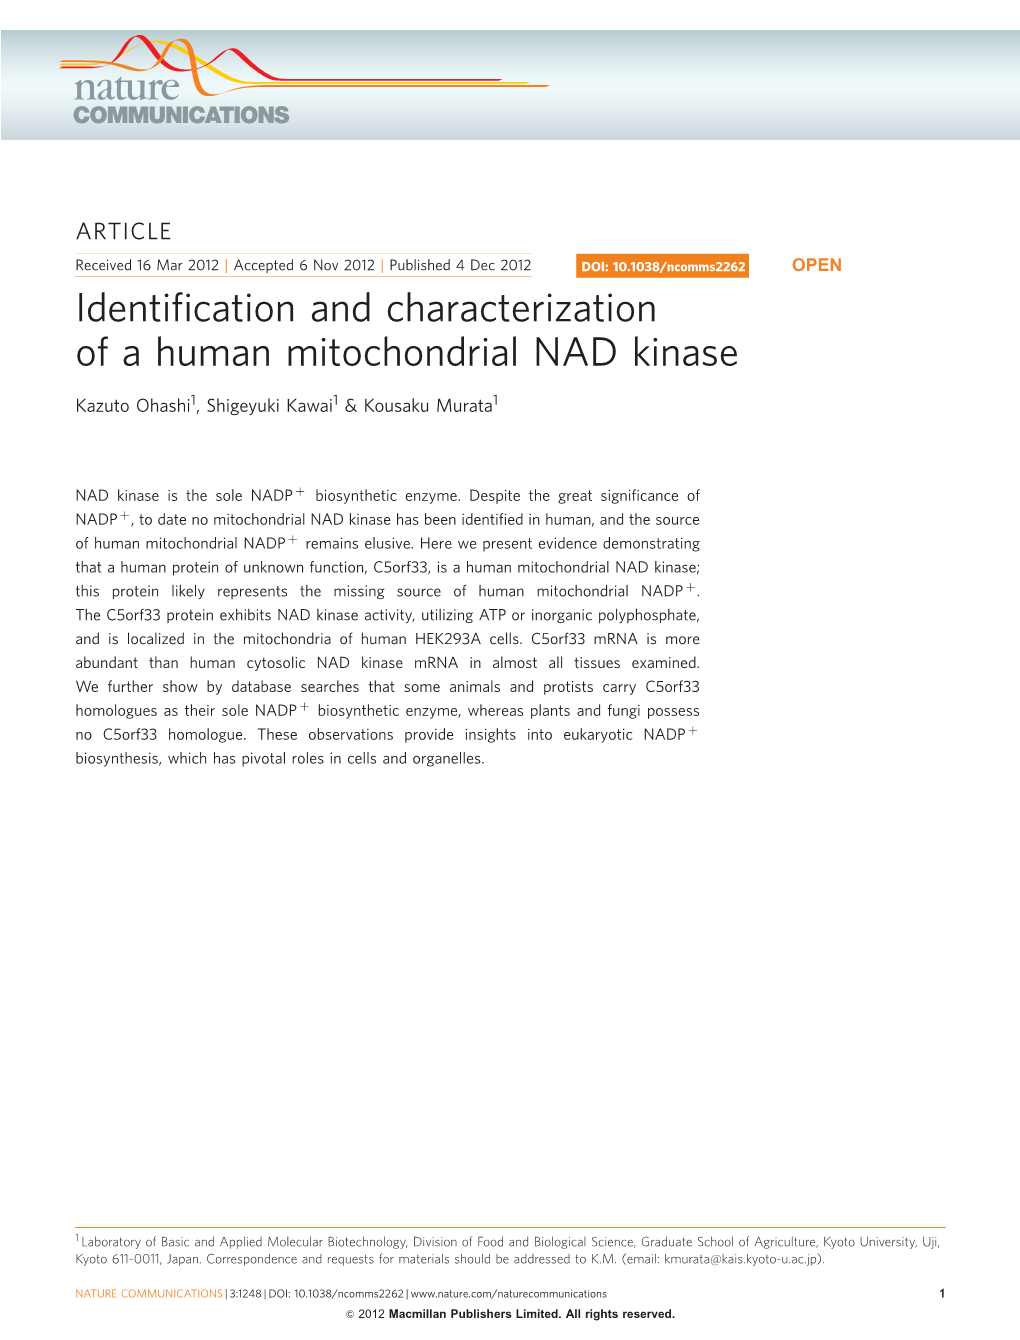 Identification and Characterization of a Human Mitochondrial NAD Kinase